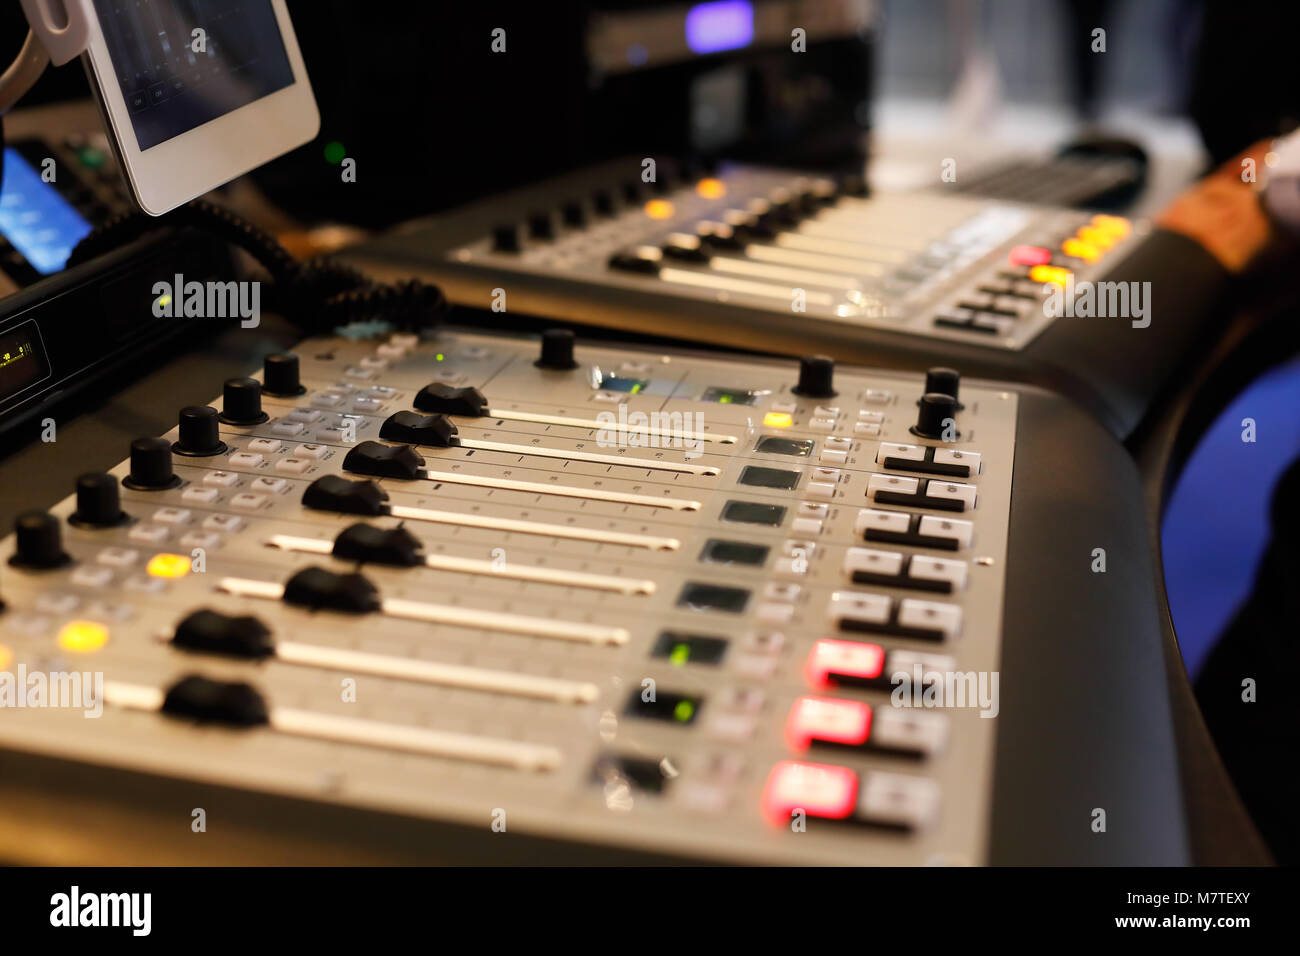 Studio mit modernem Sound Mixing Equipment. Selektive konzentrieren. Stockfoto